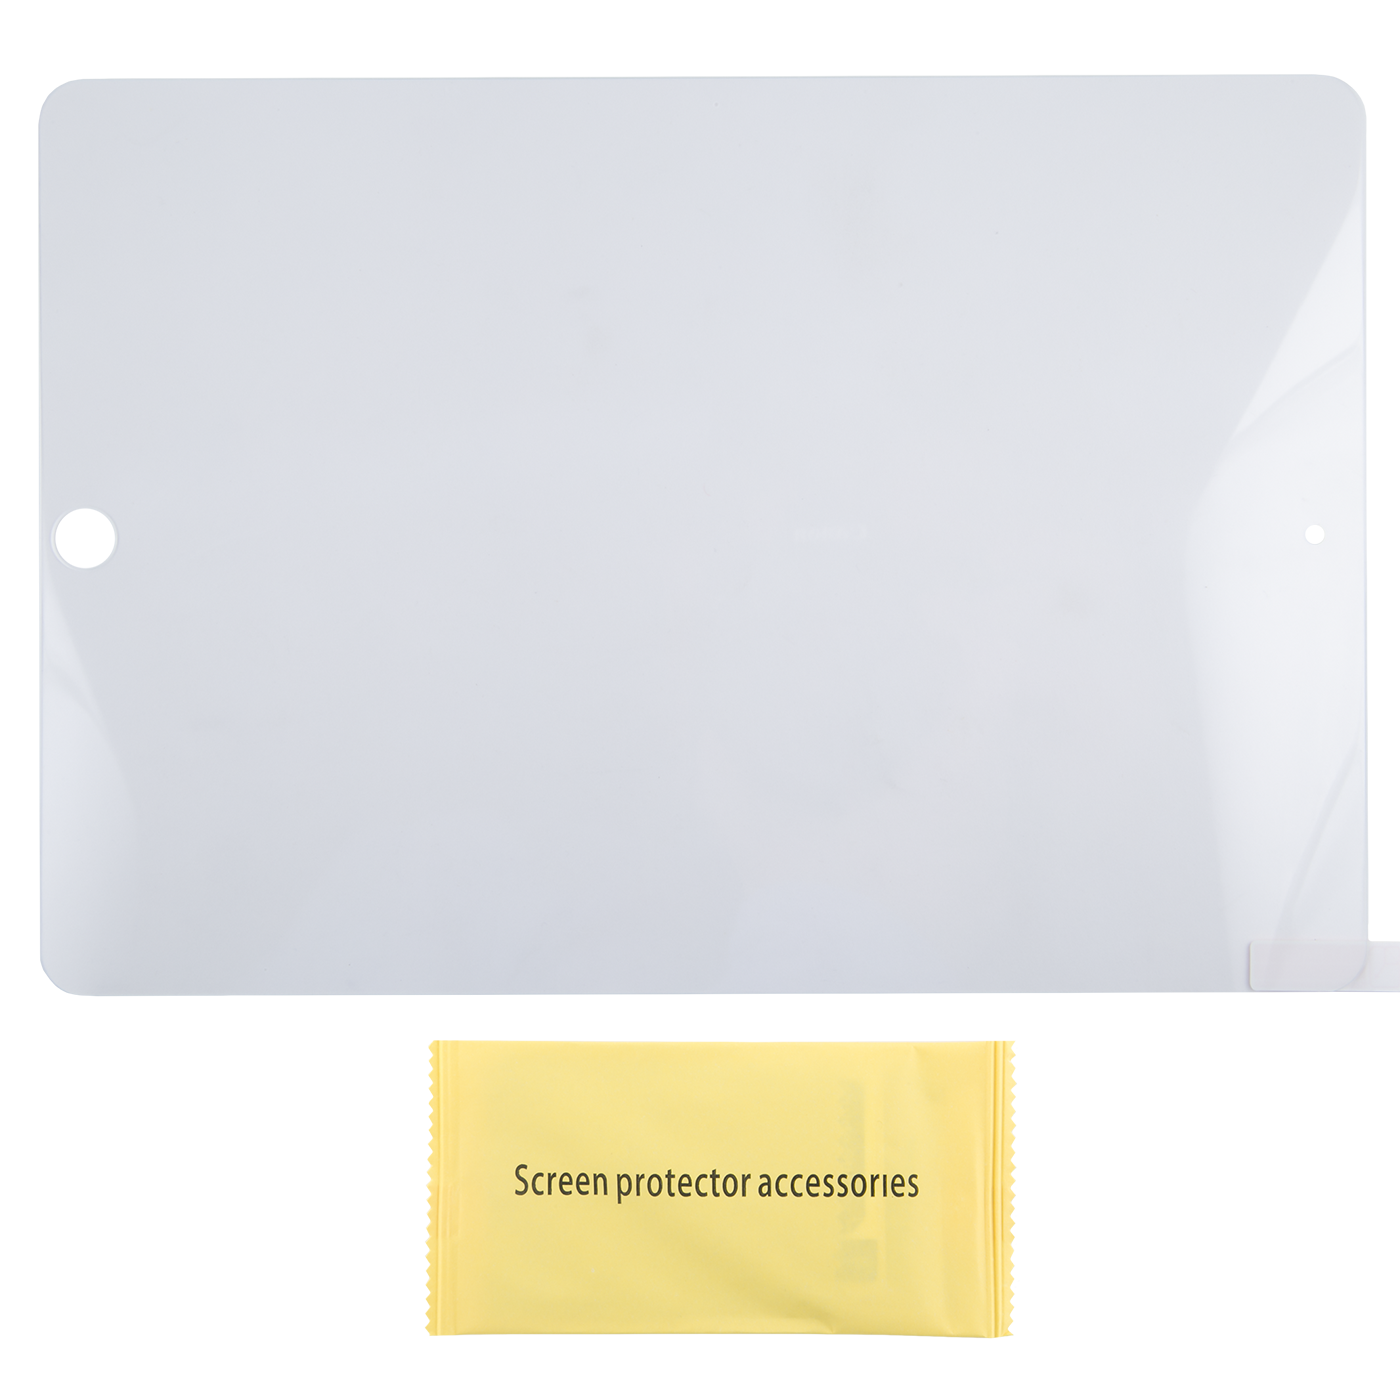 Защитный экран Red Line iPad 10,2" (2019) tempered glass